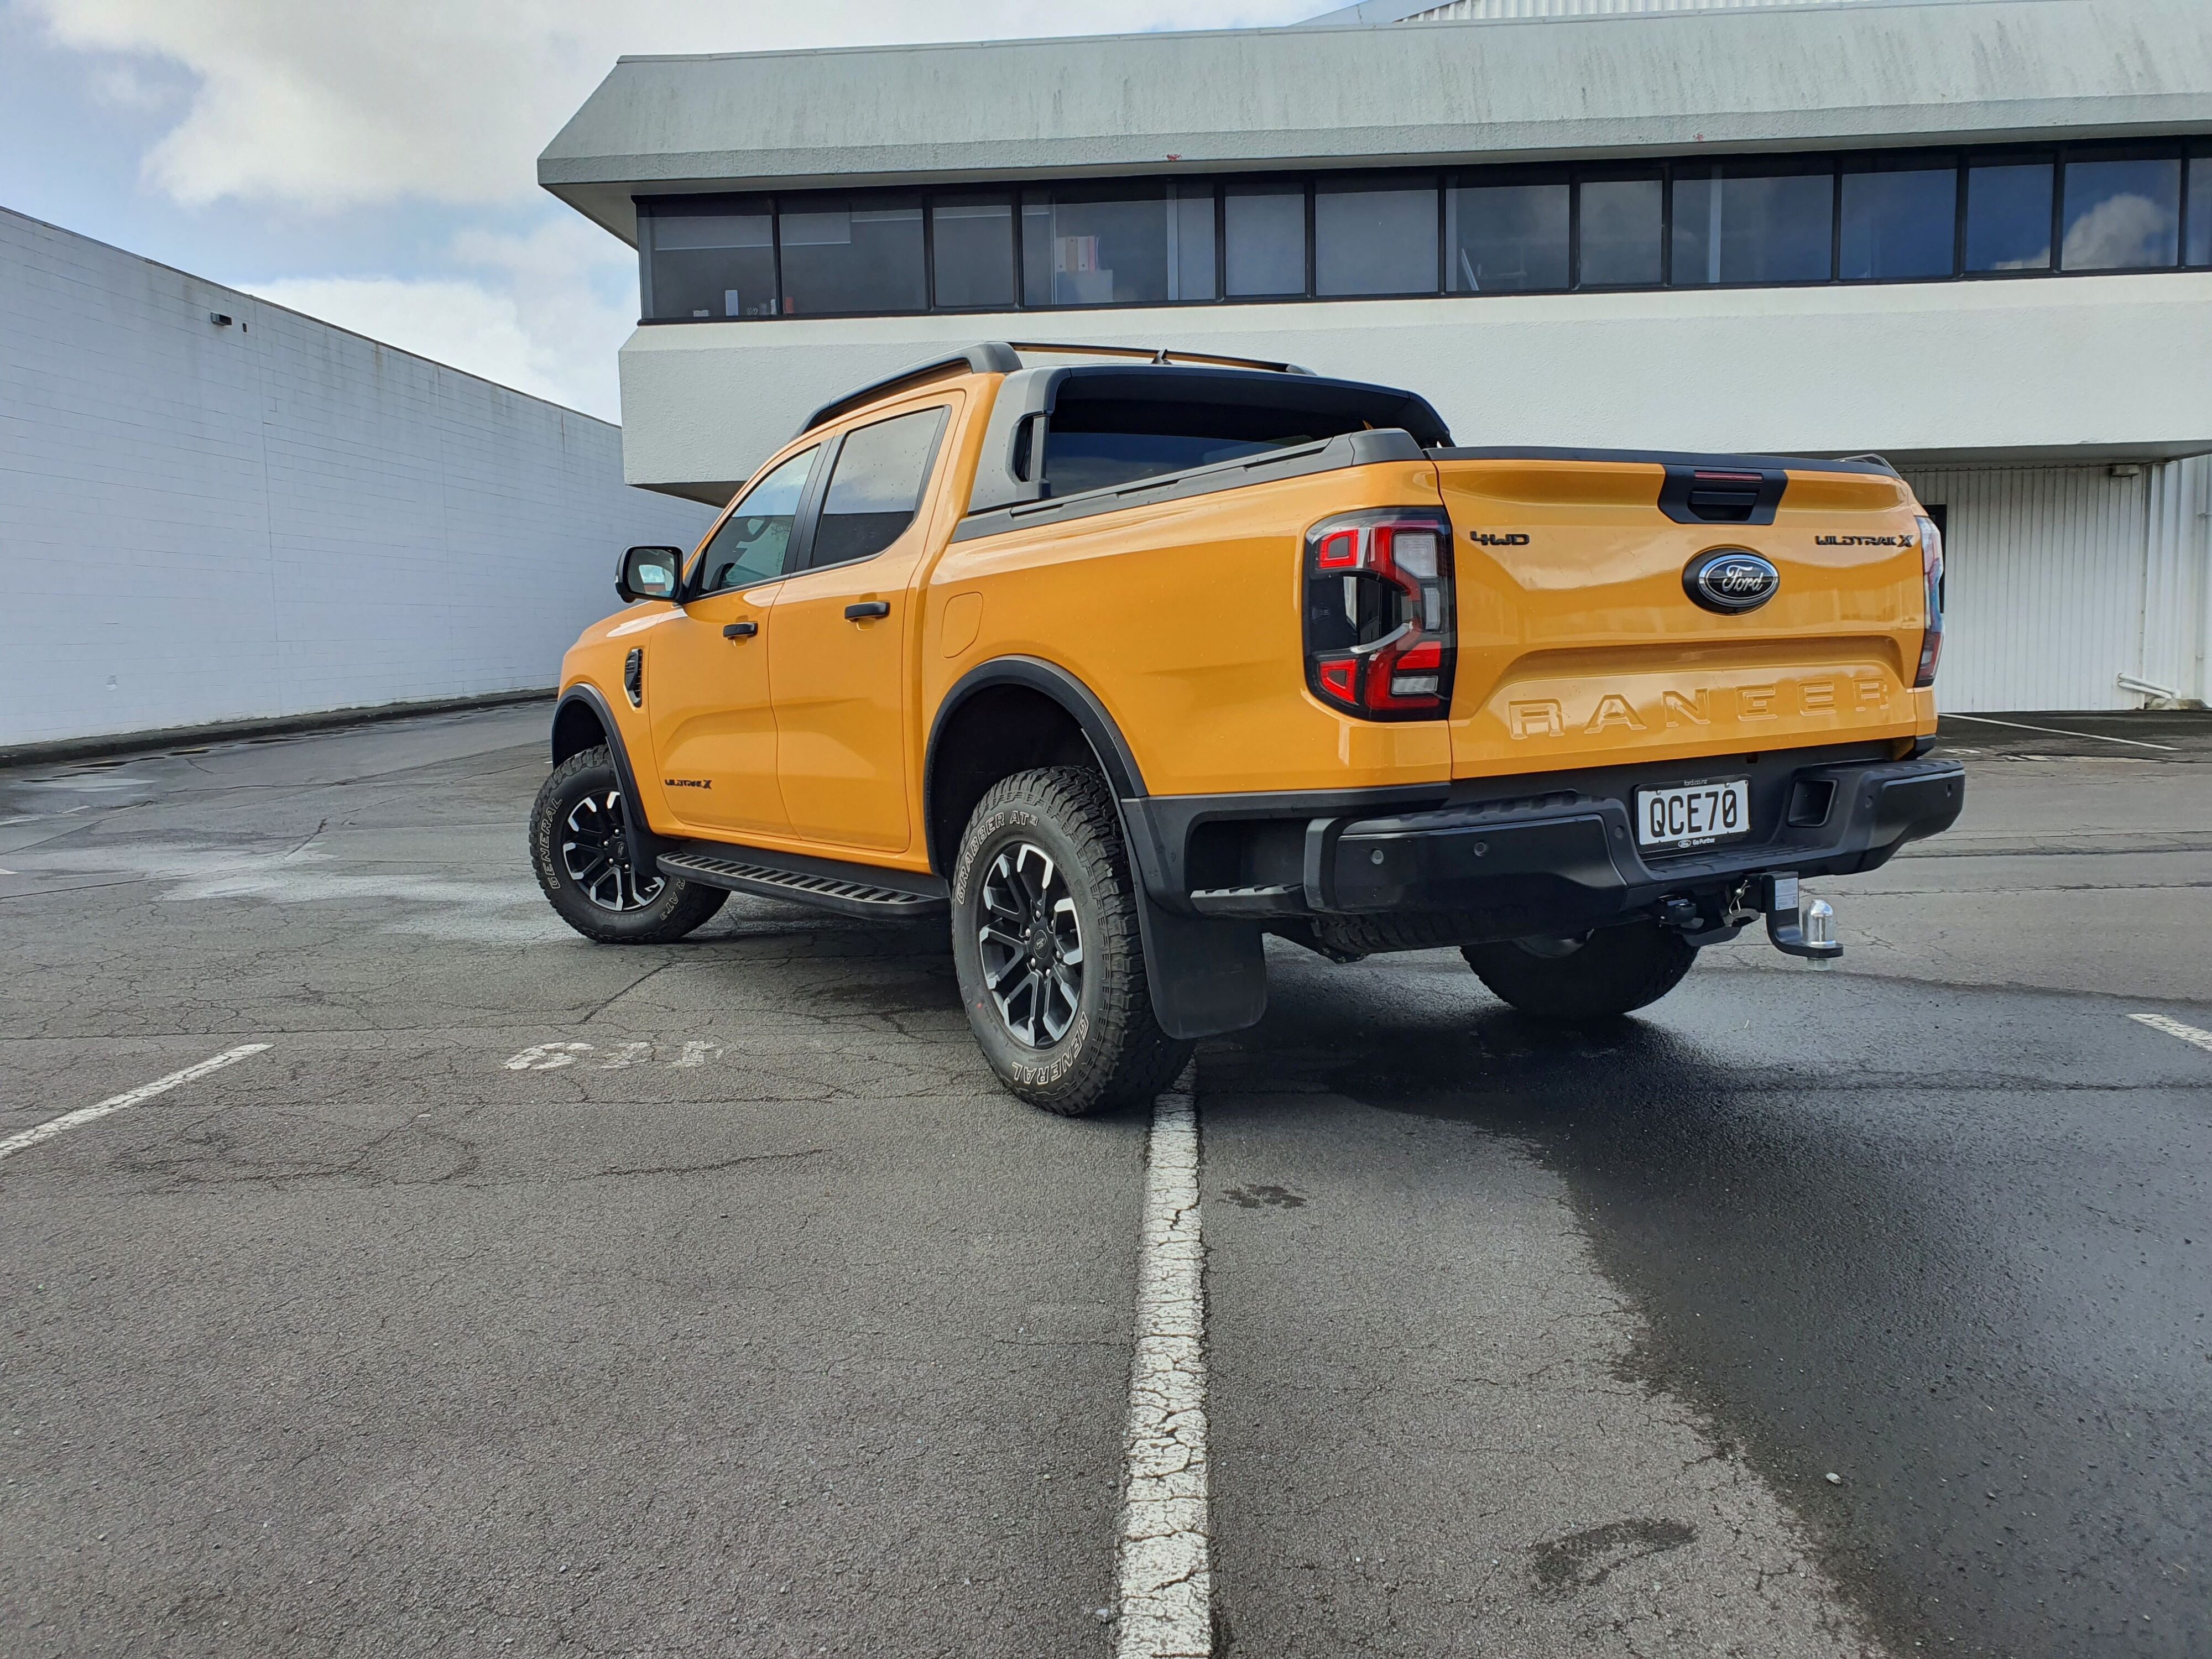 Ford Ranger Wildtrak X Debuts With Off-Road Goodies As Raptor Lite